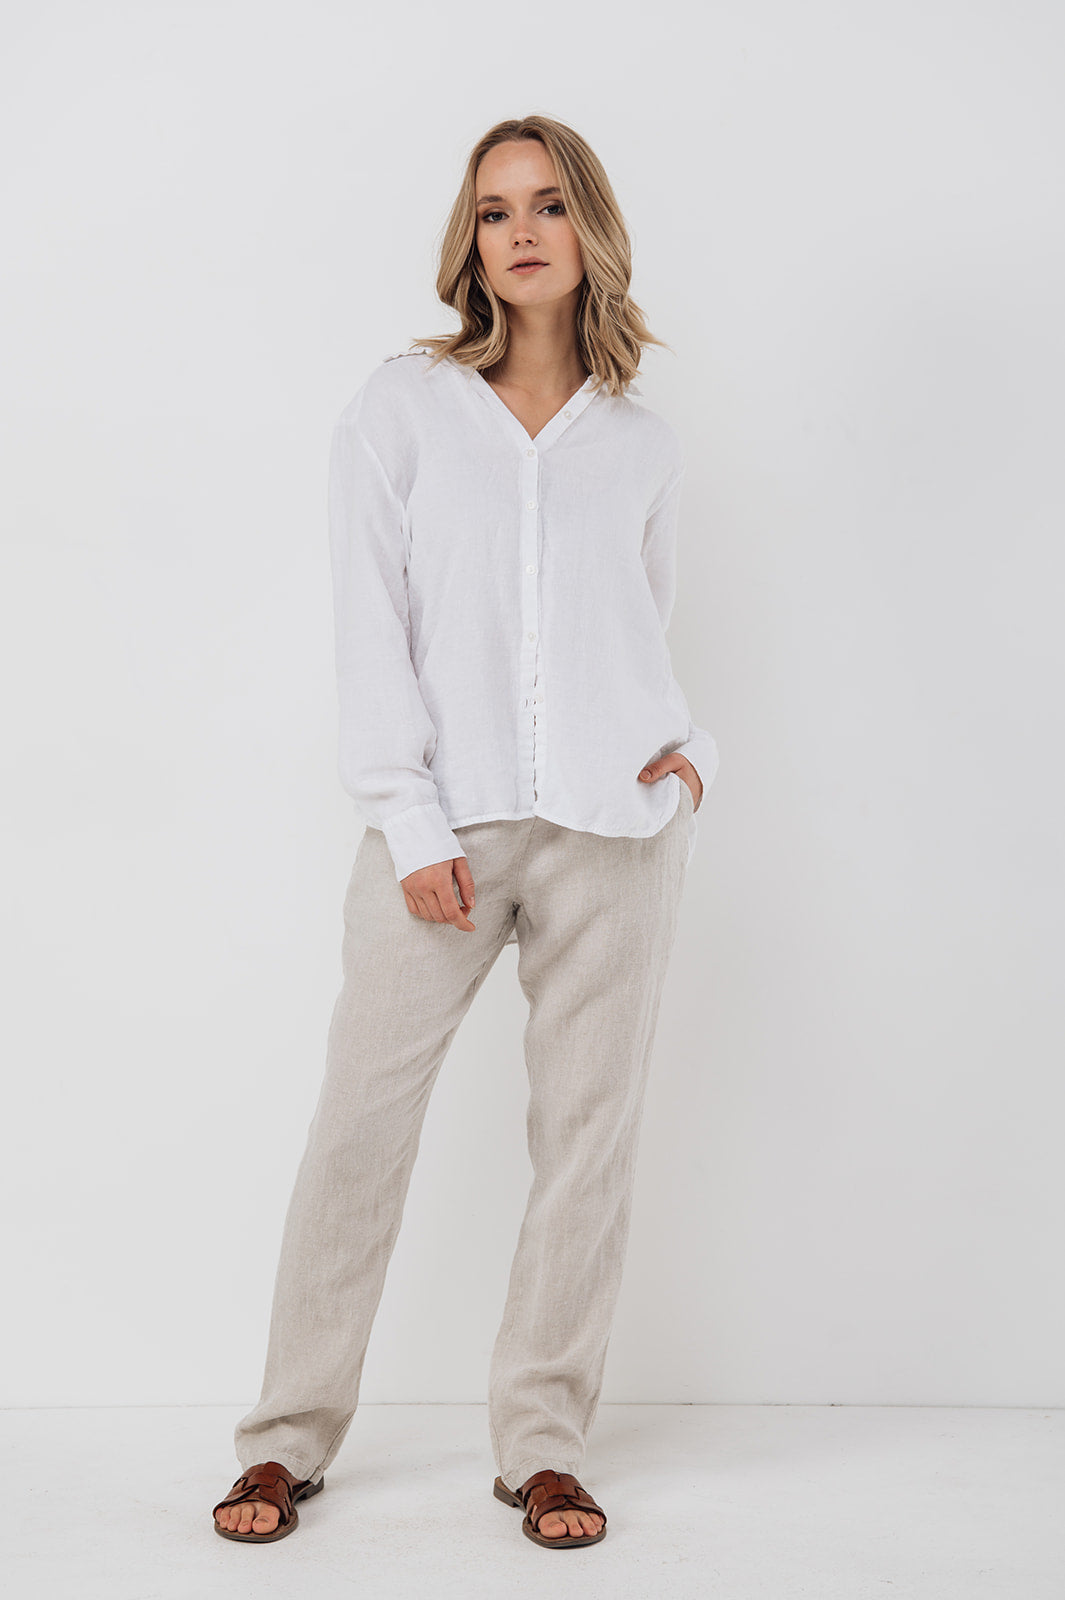 Stylish linen shirts, linen trousers, linen kurtas and more! – Linen Trail